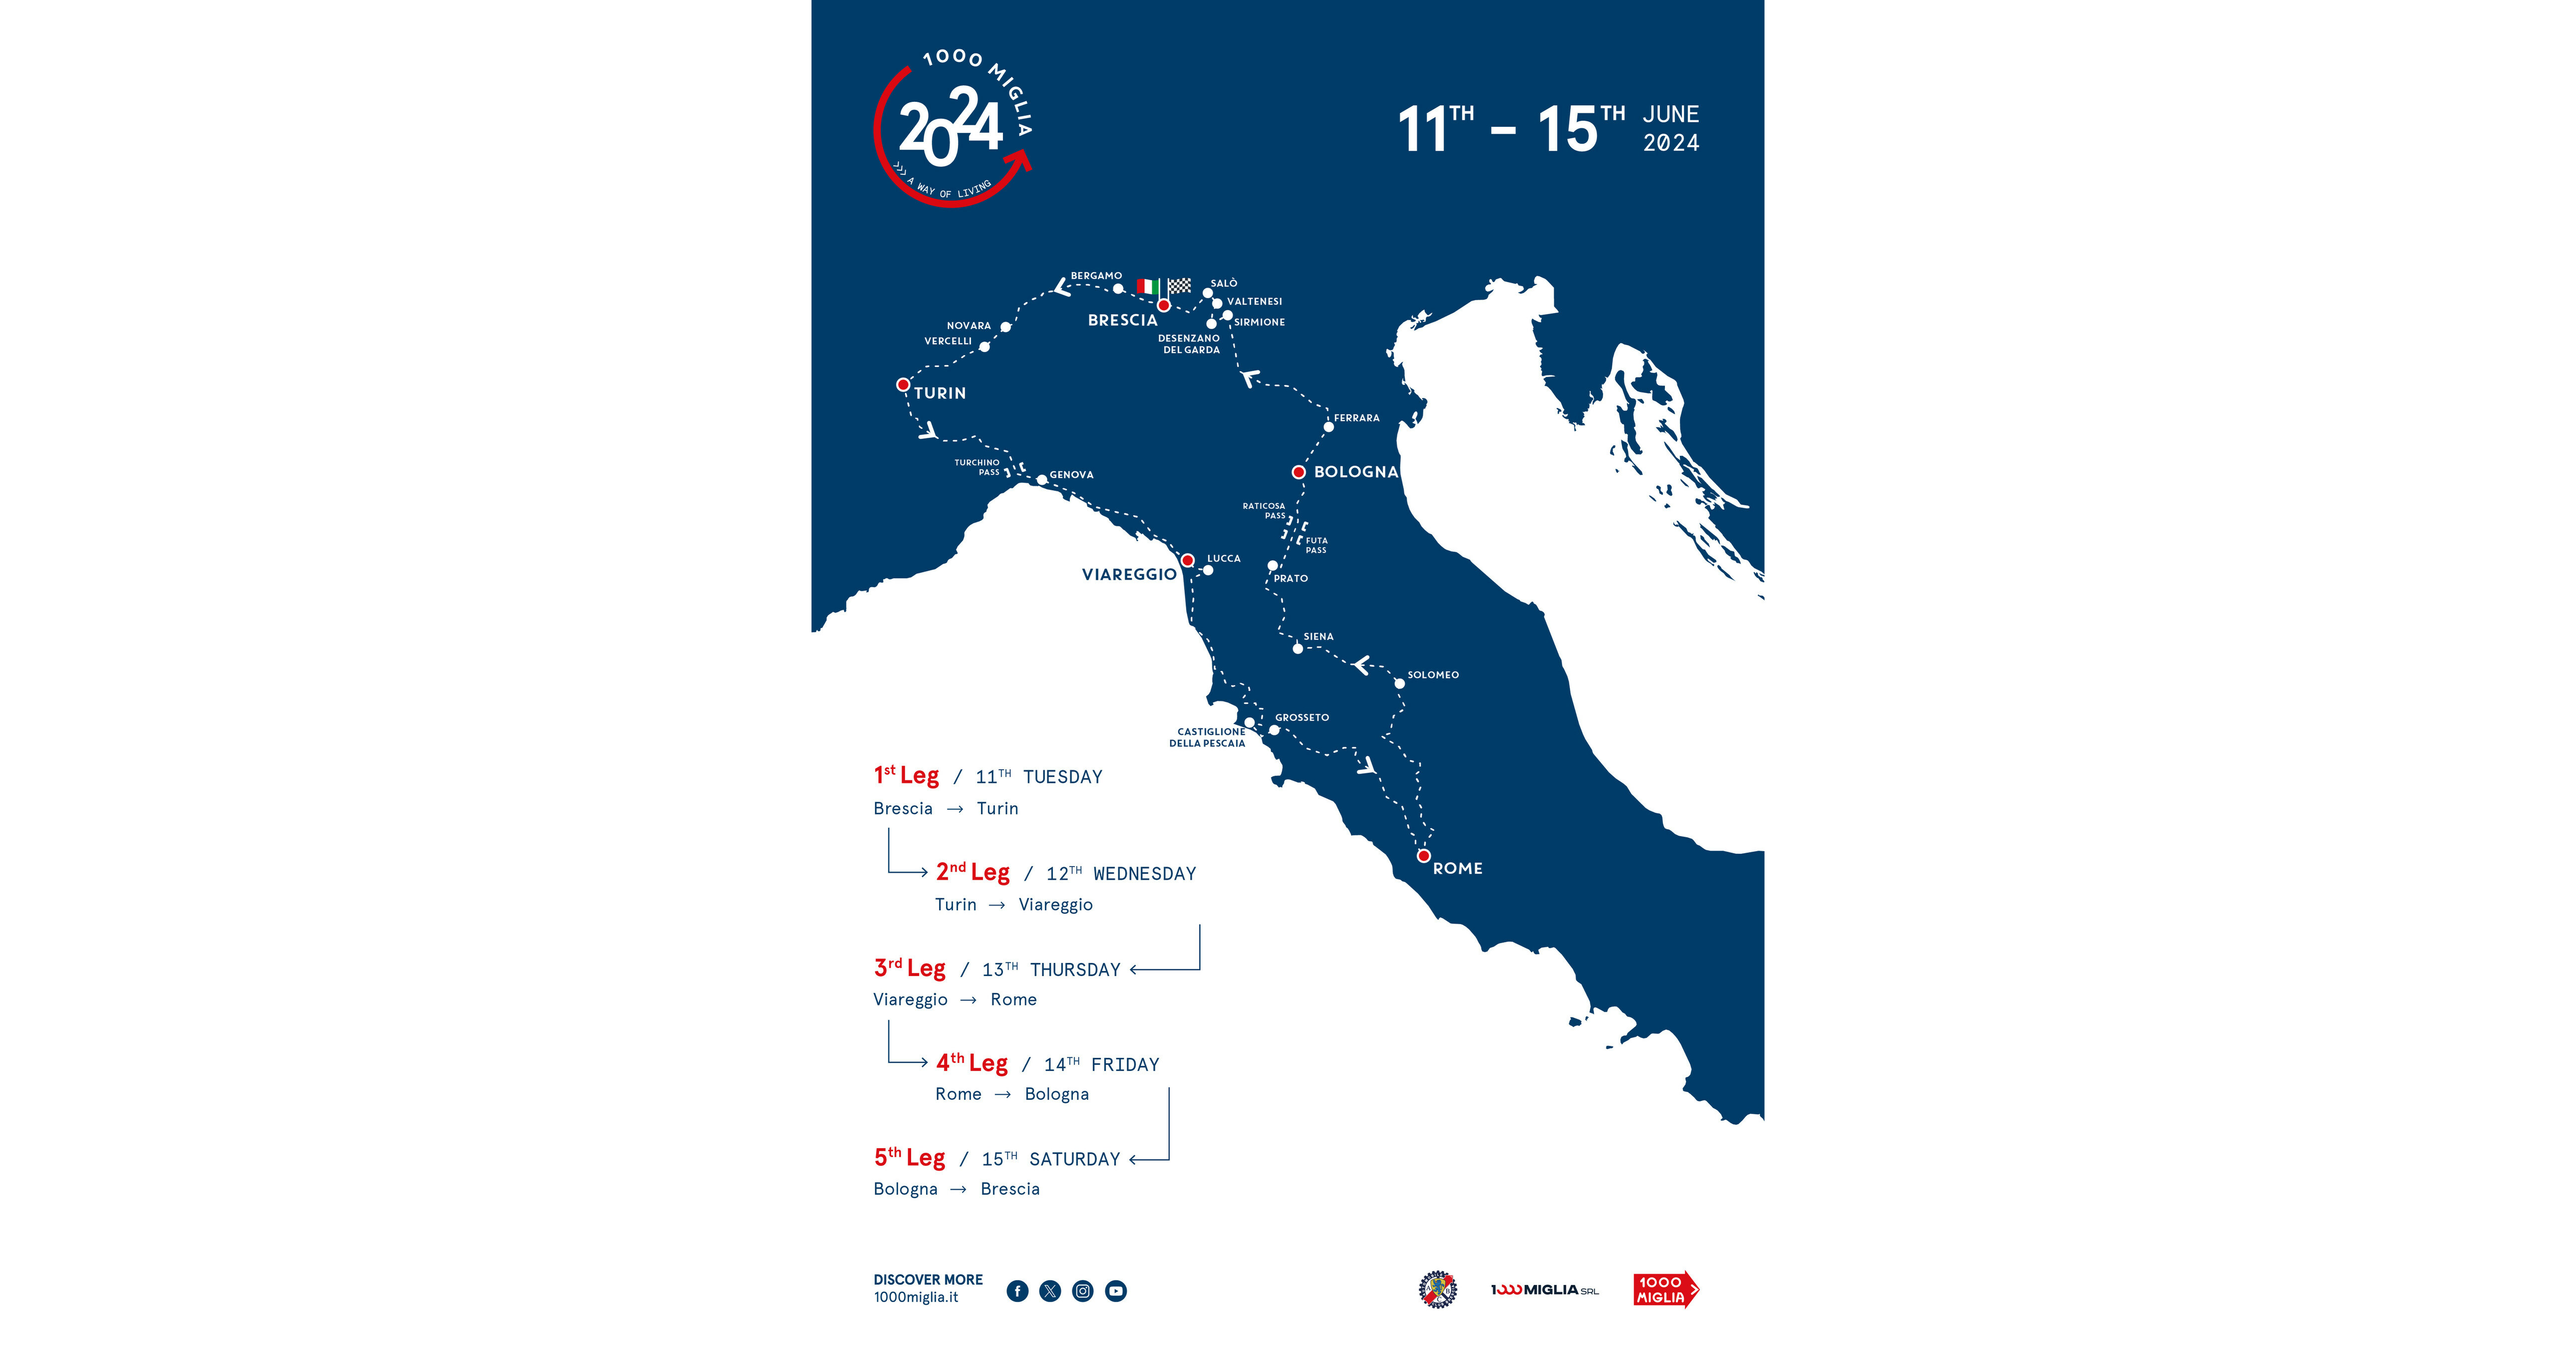 Présentation de la 1000 Miglia 2024 cinq étapes DU MARDI 11 au SAMEDI